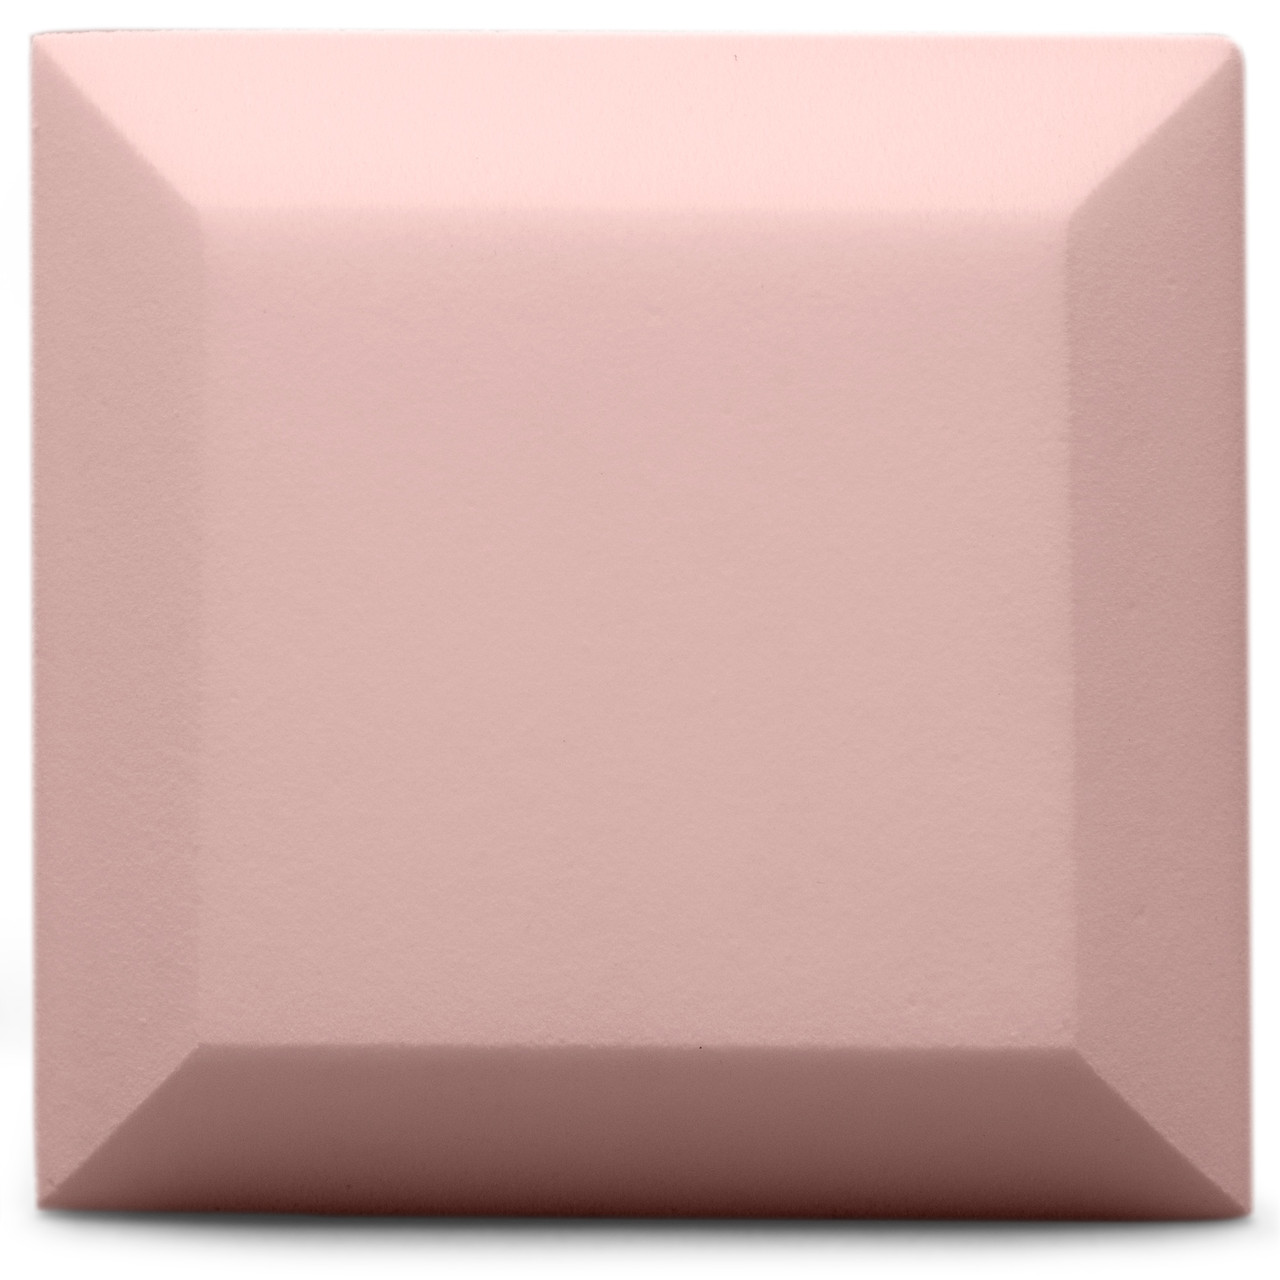 Оксамитова акустична панель з акустичного поролону Ecosound Velvet Rose 25х25см 50мм. Колір світло-рожевий